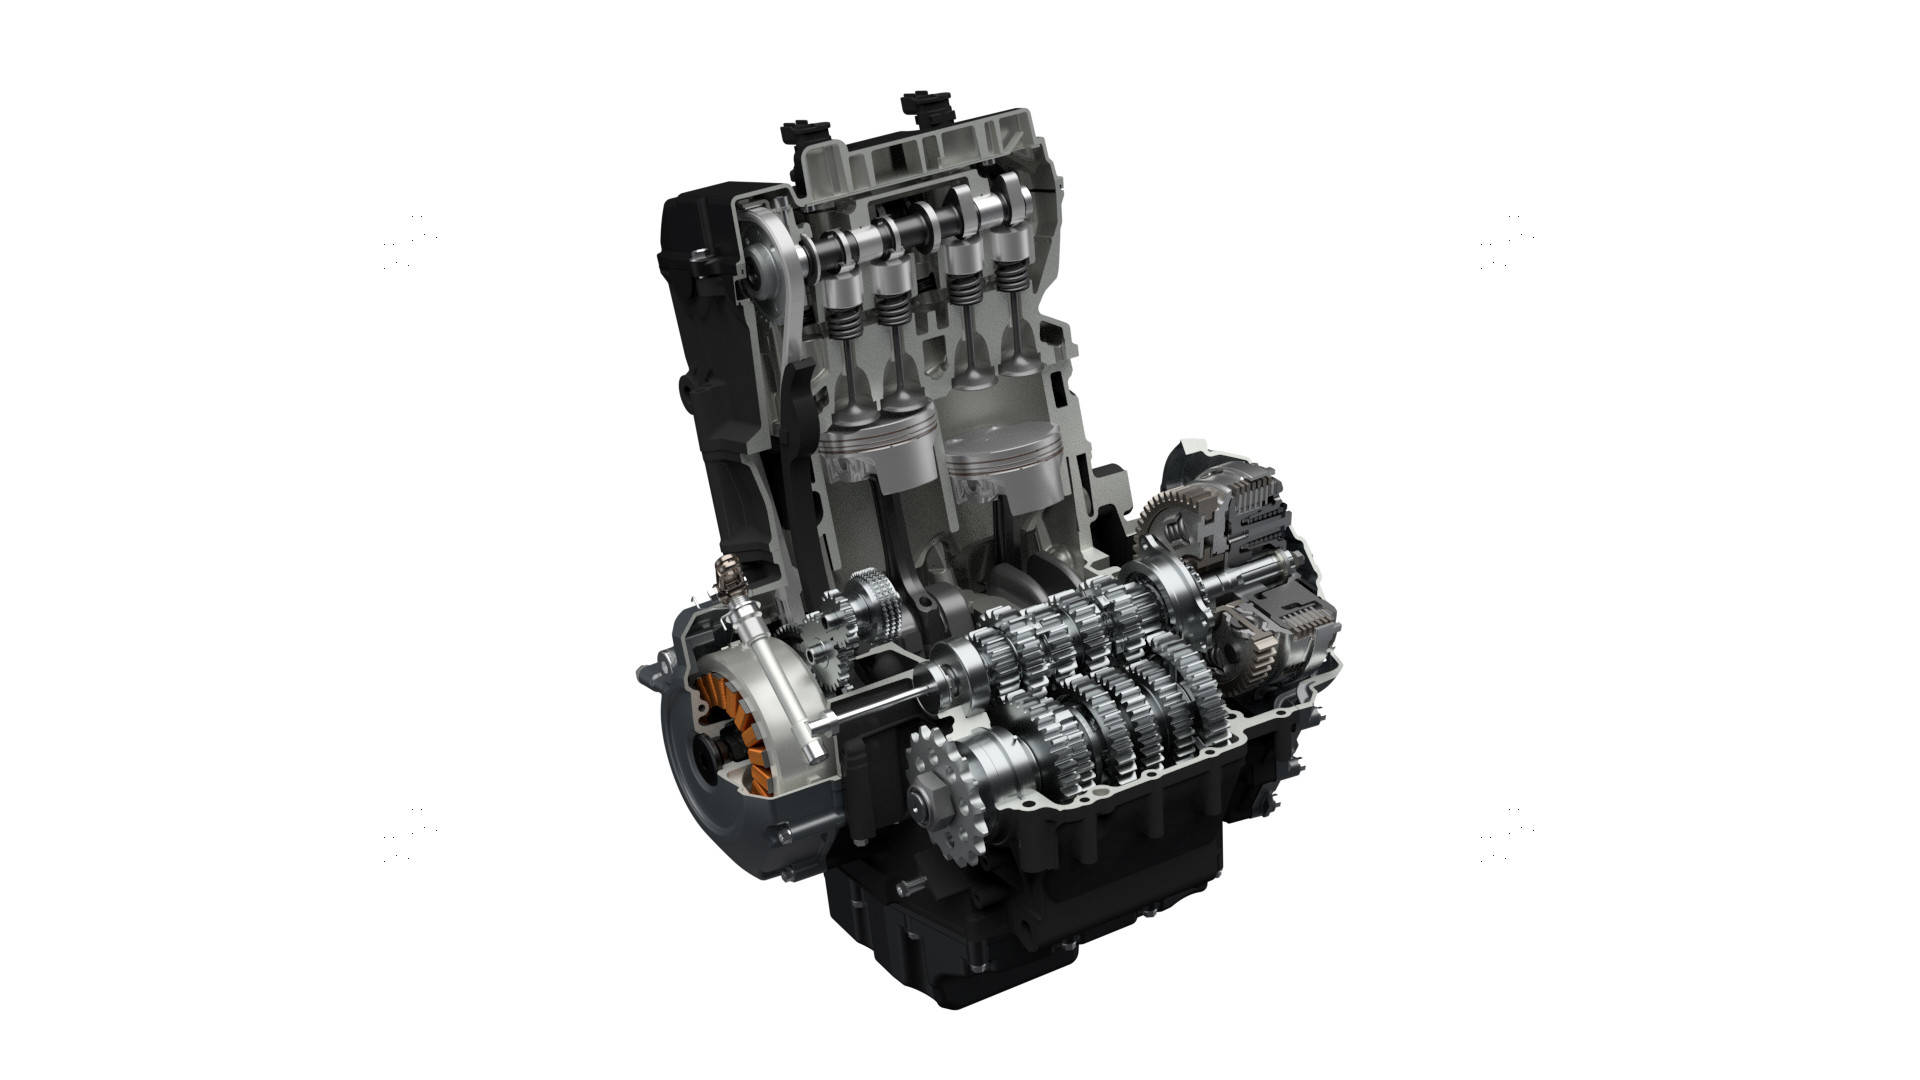 A cutaway view of Suzuki's new 776cc parallel twin engine. Image courtesy Suzuki Motor USA, LLC.